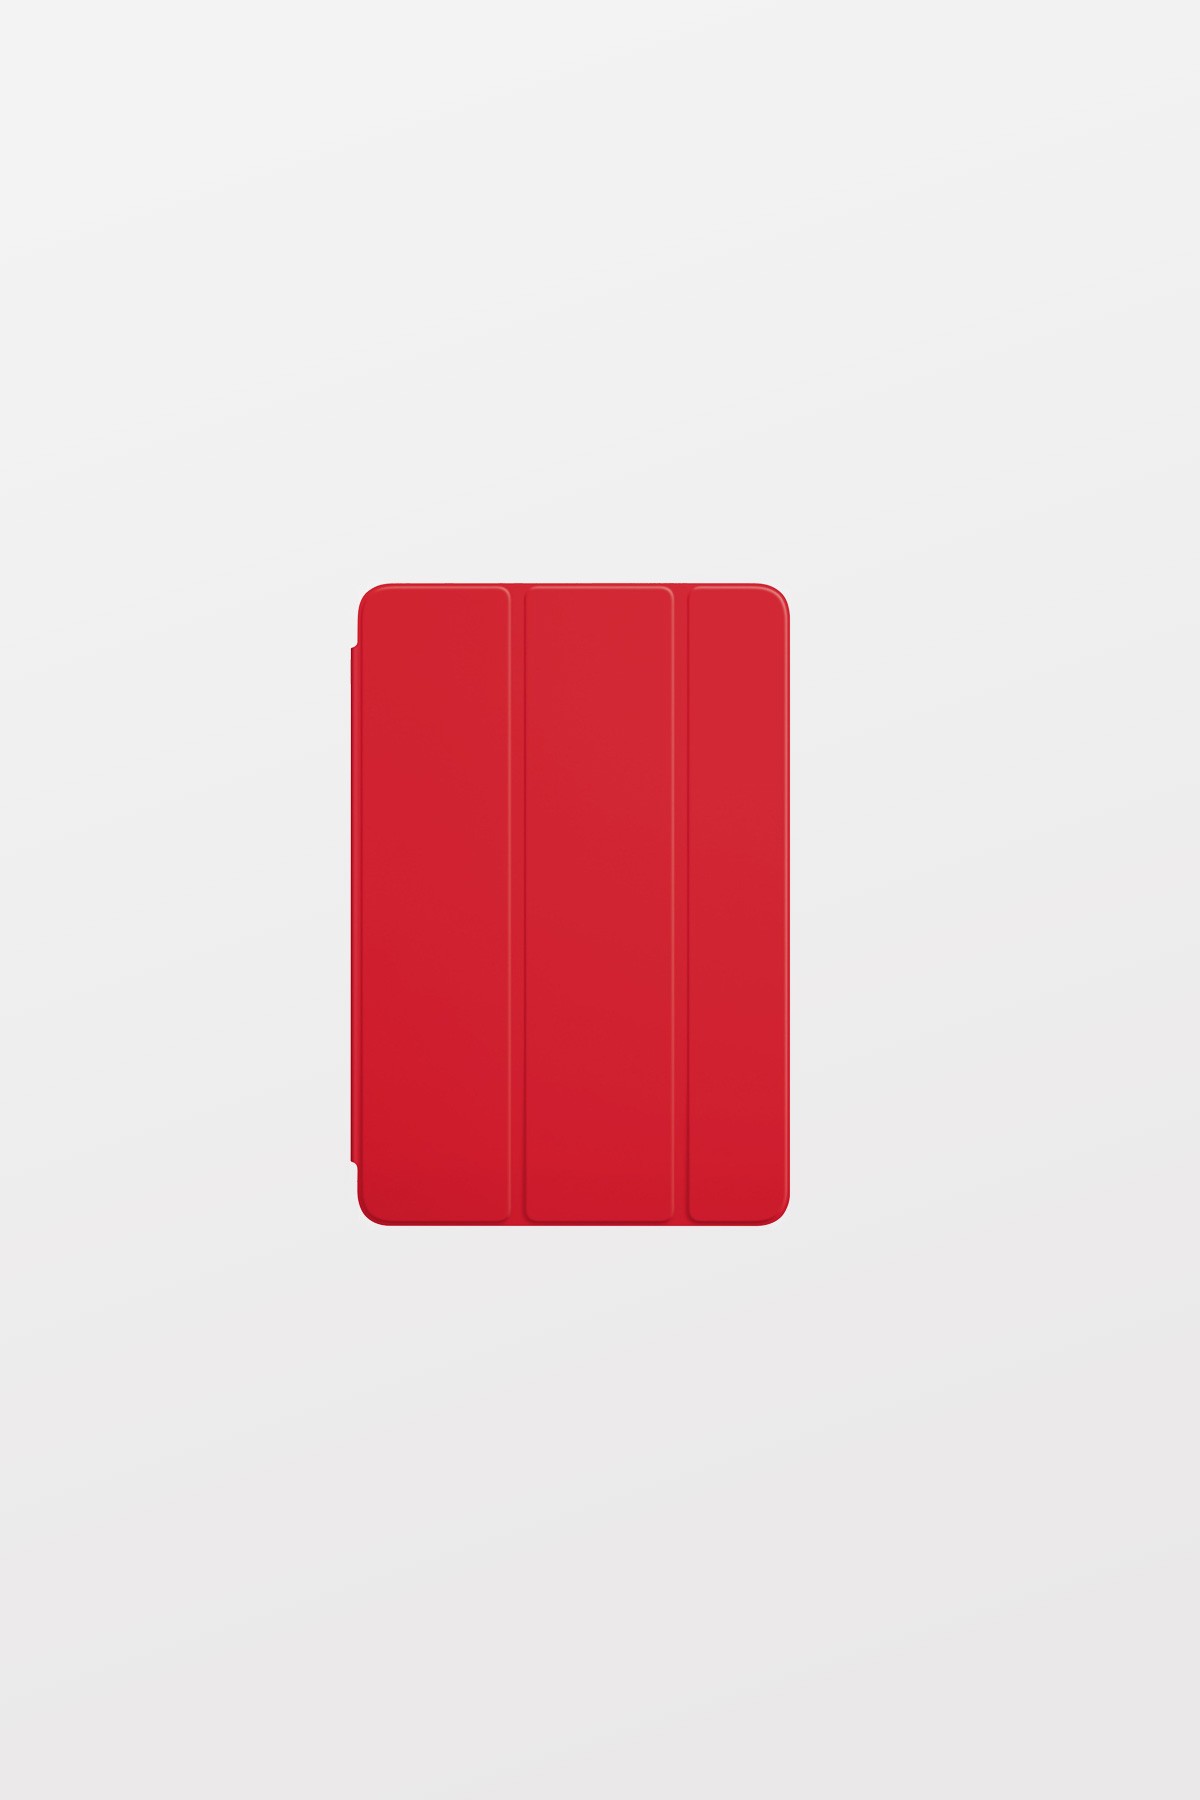 Apple iPad mini with Retina Display Smart Cover - Red